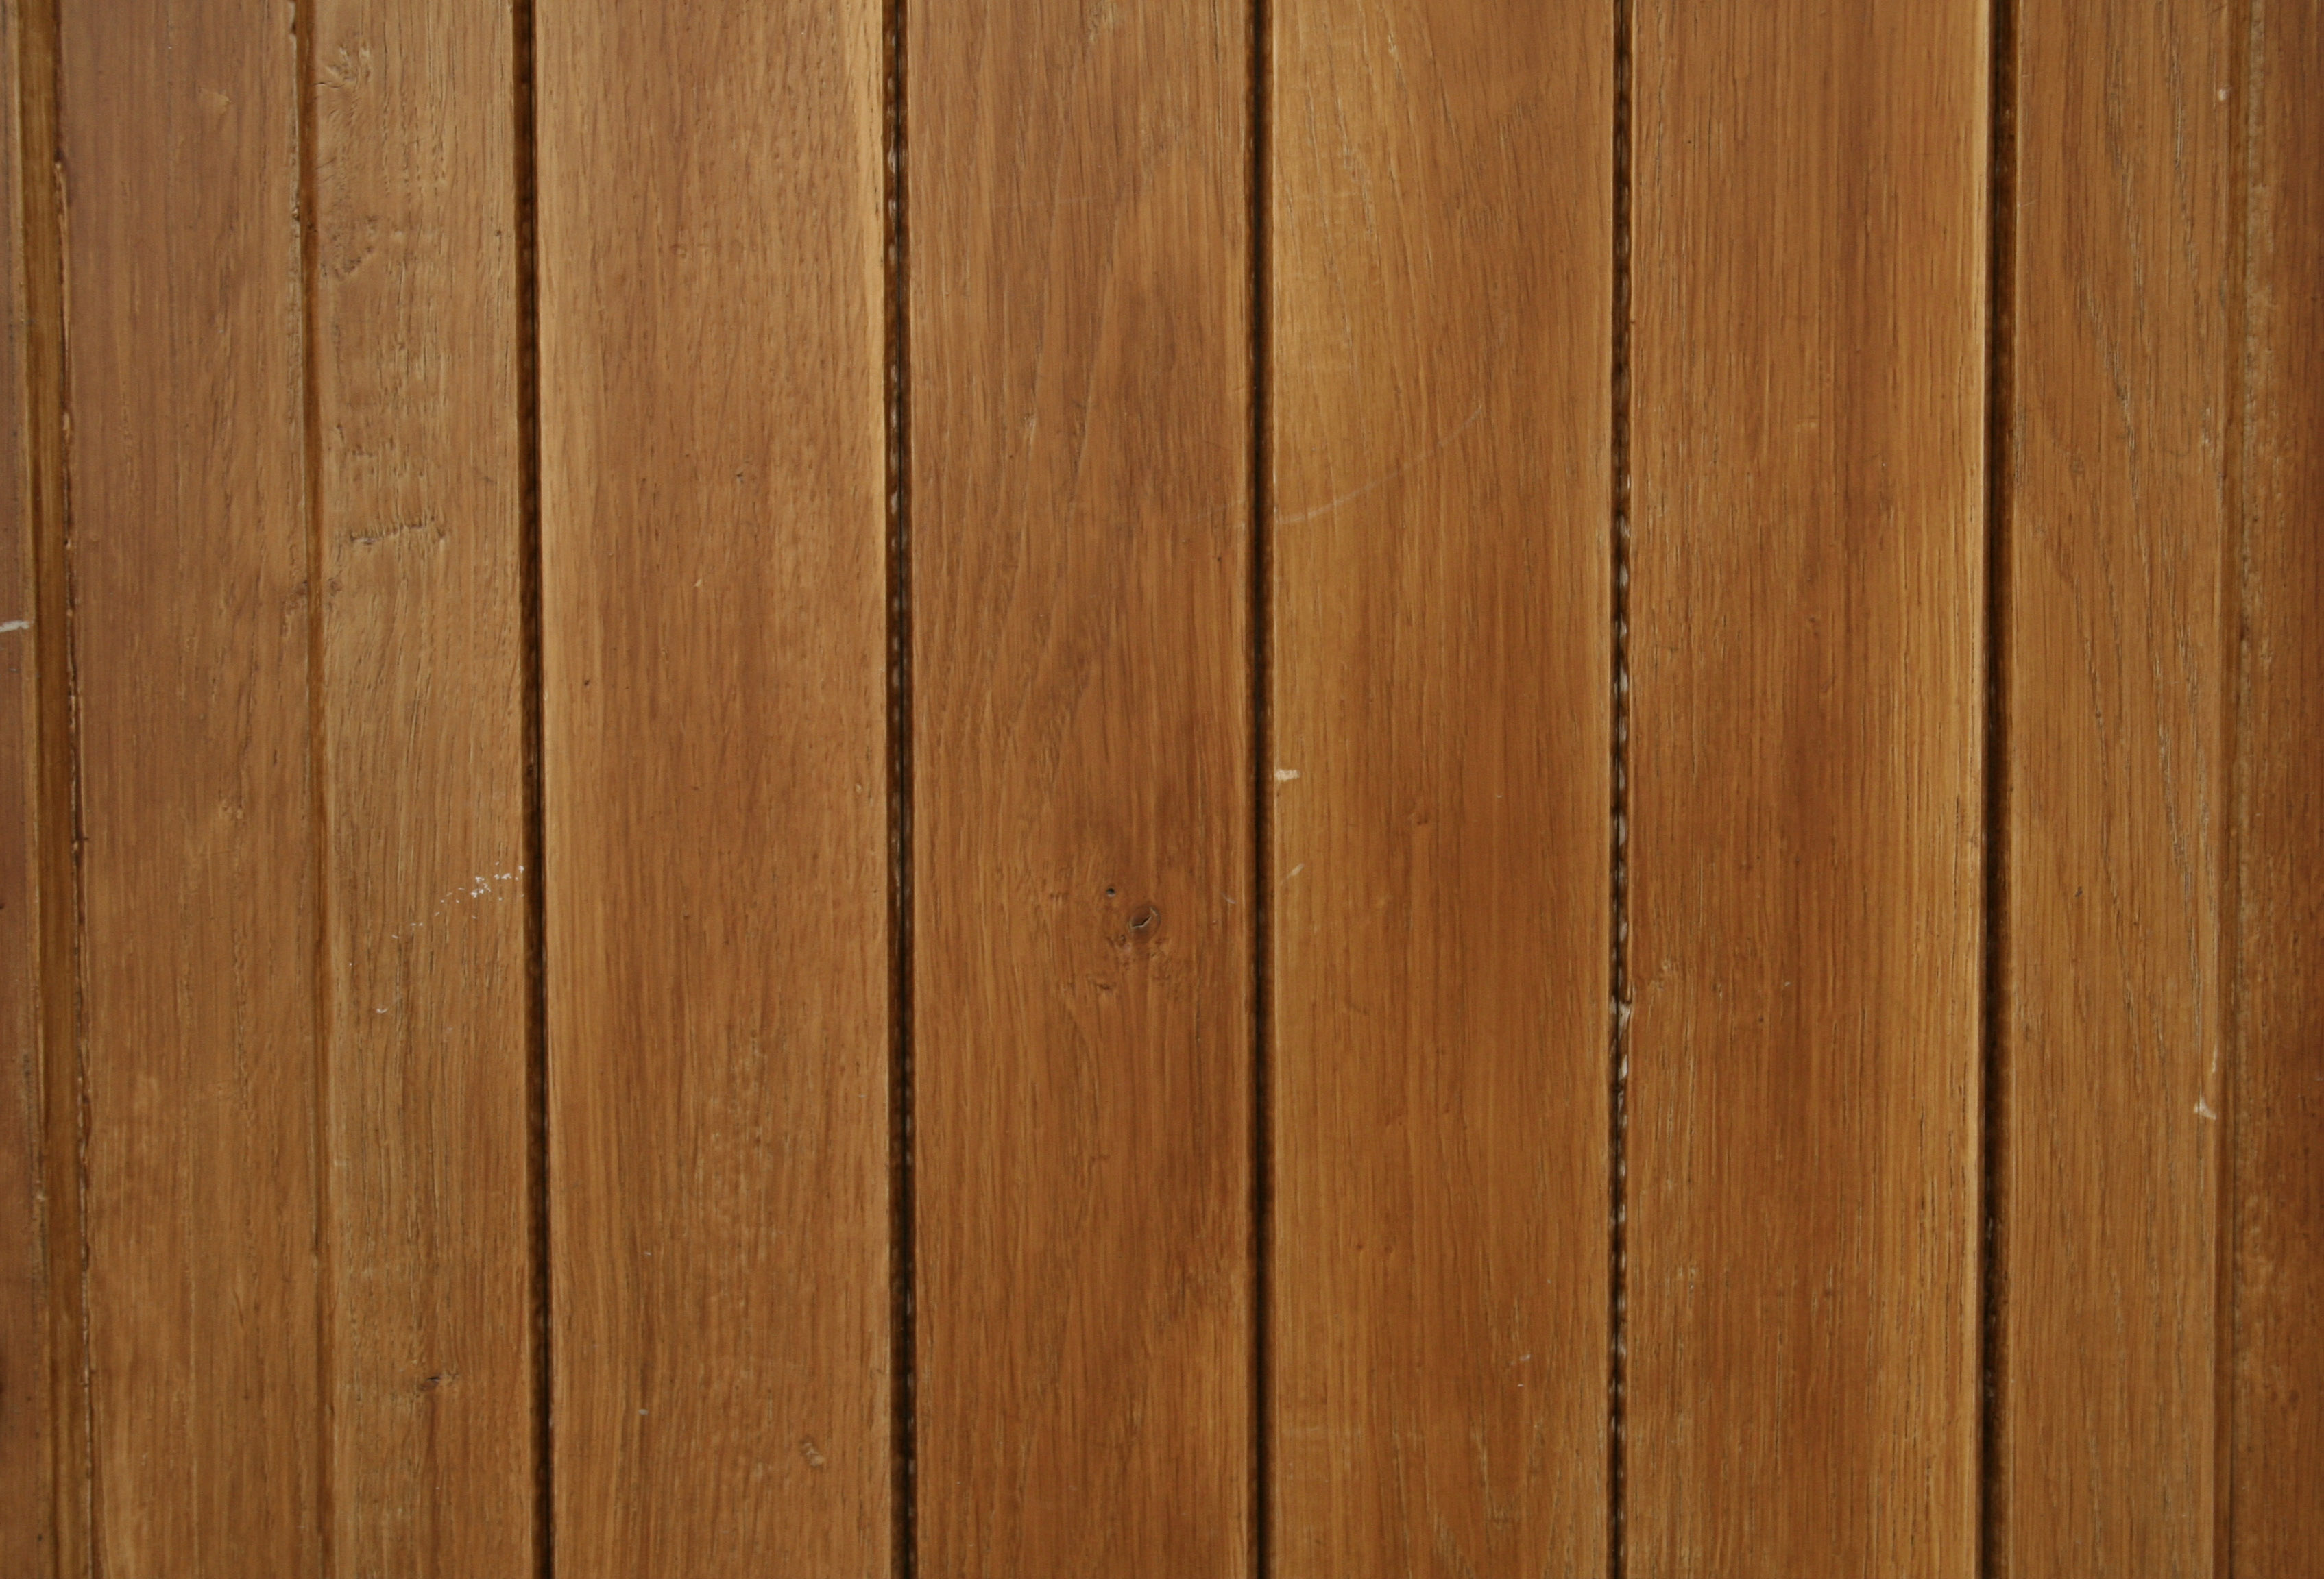 Single Wood Plank Texture